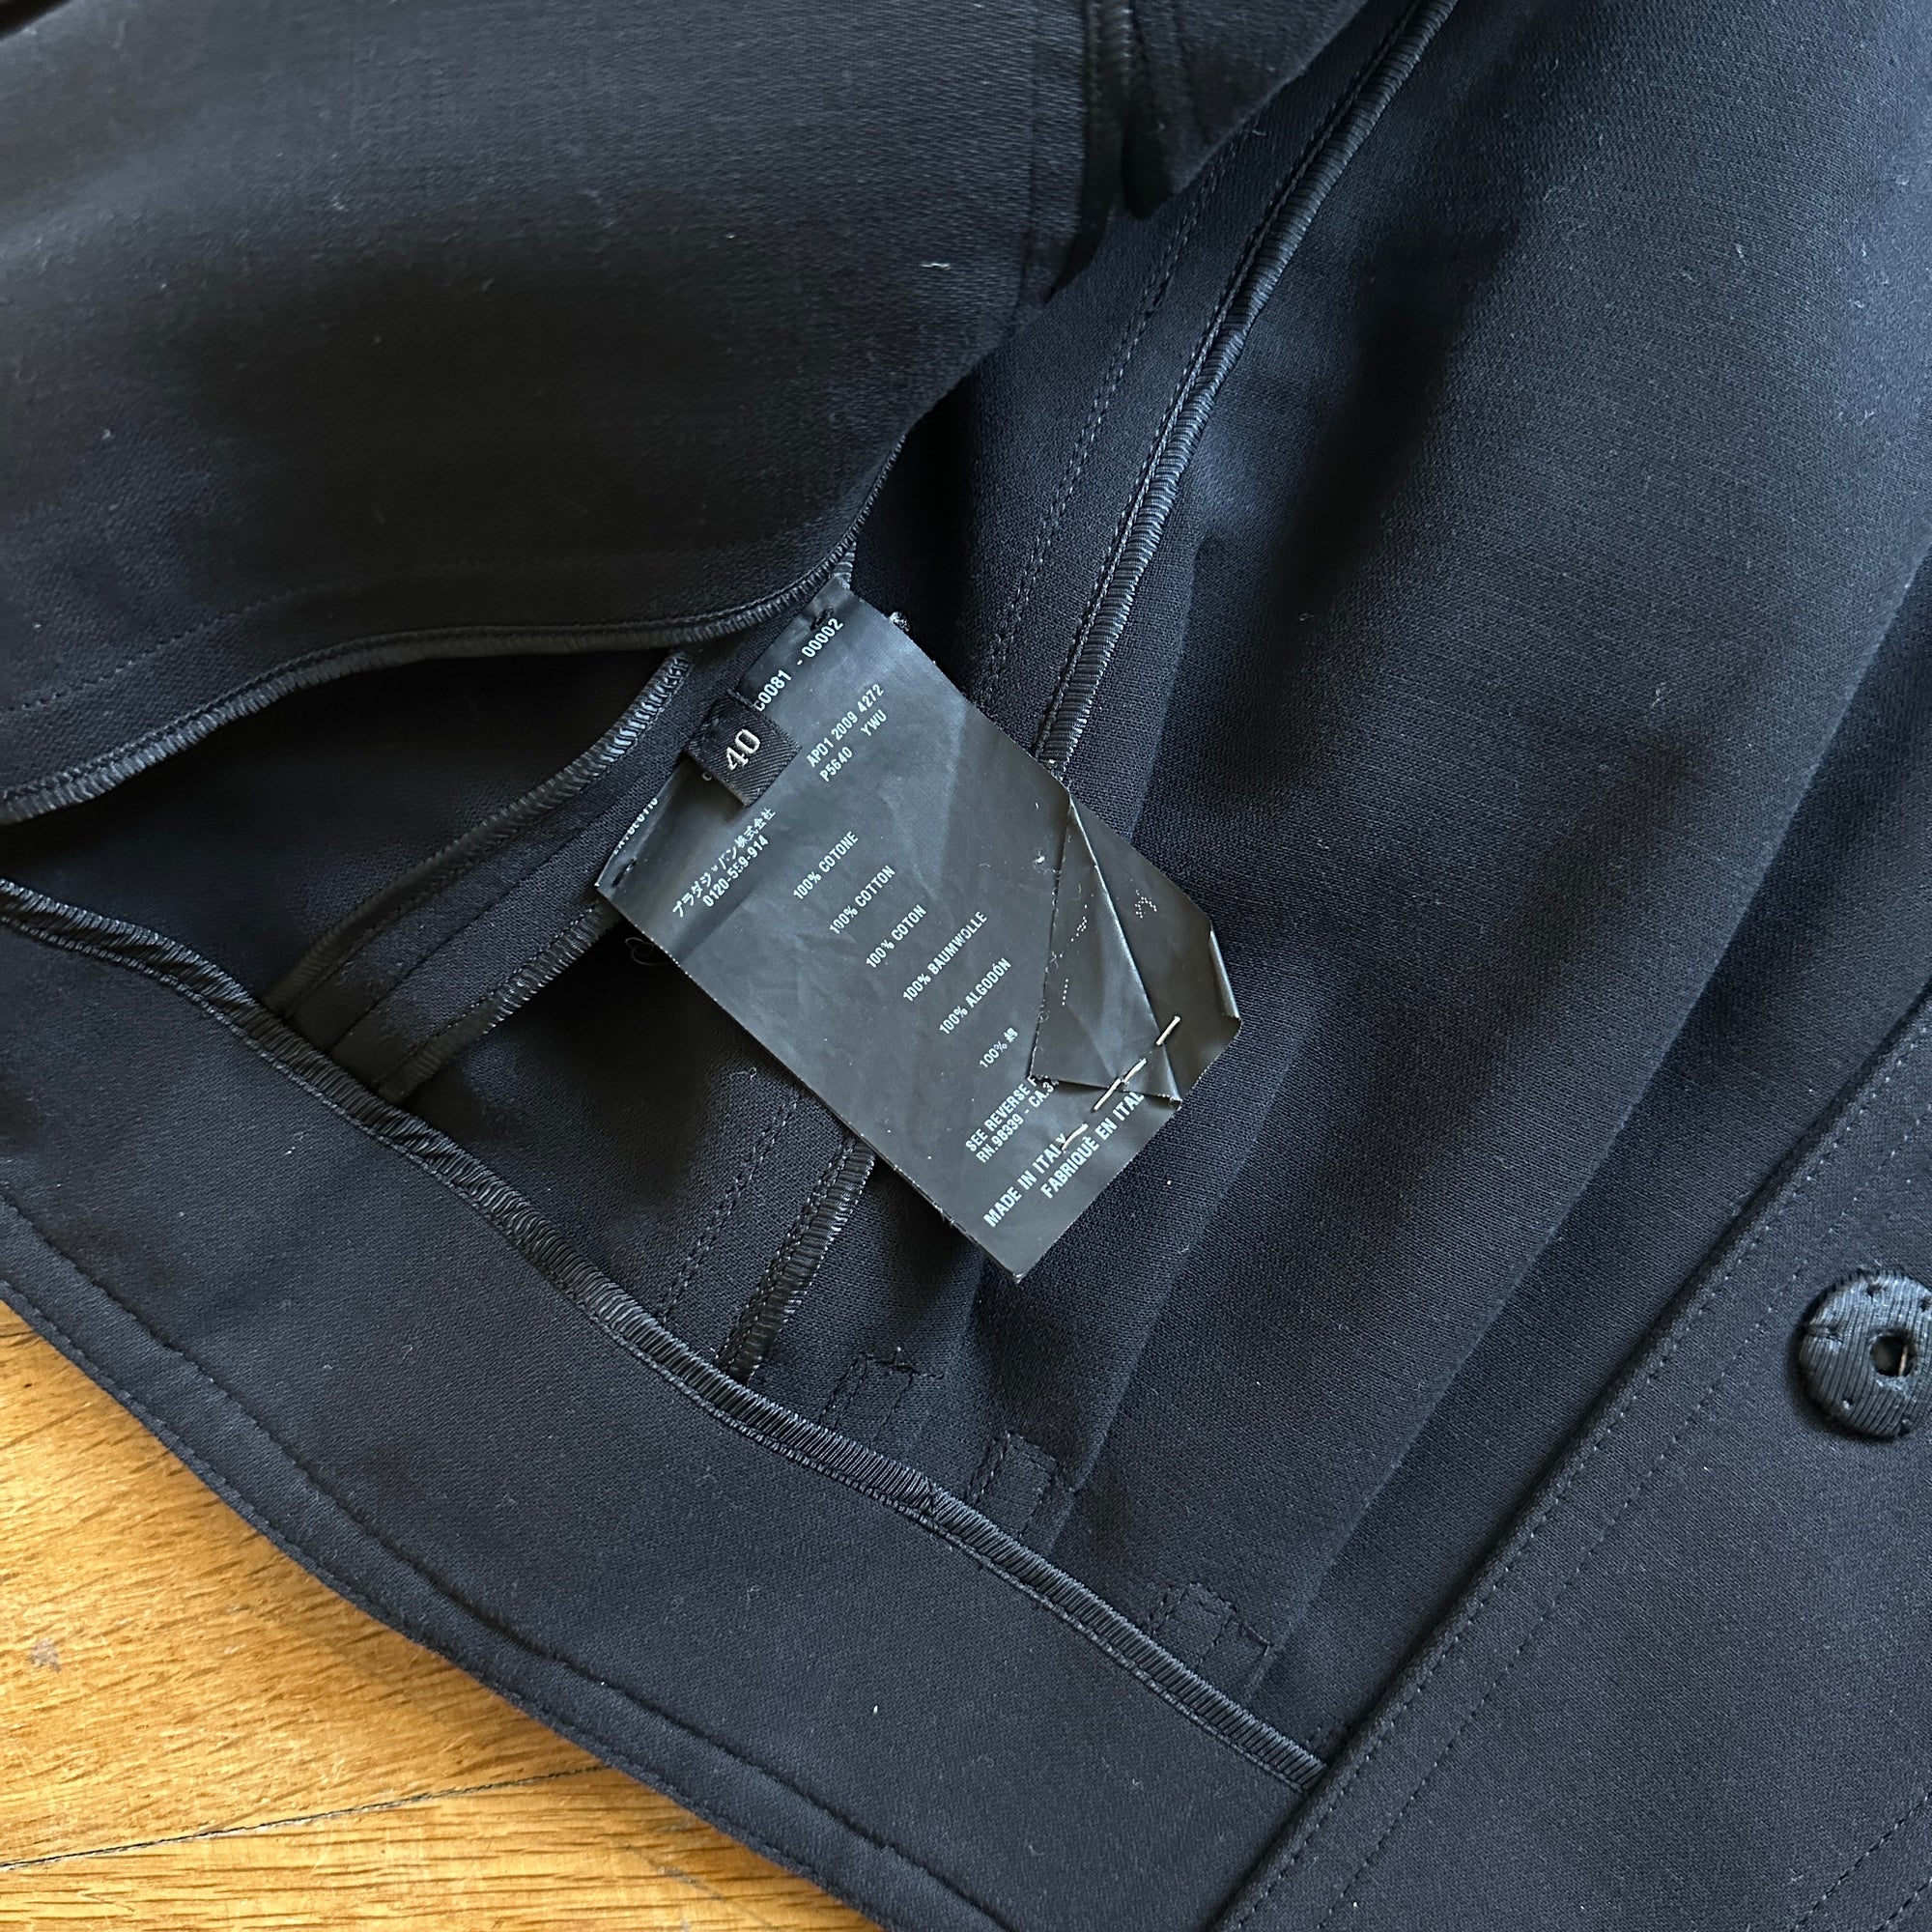 Prada 2009 Black Cropped Wool Jacket